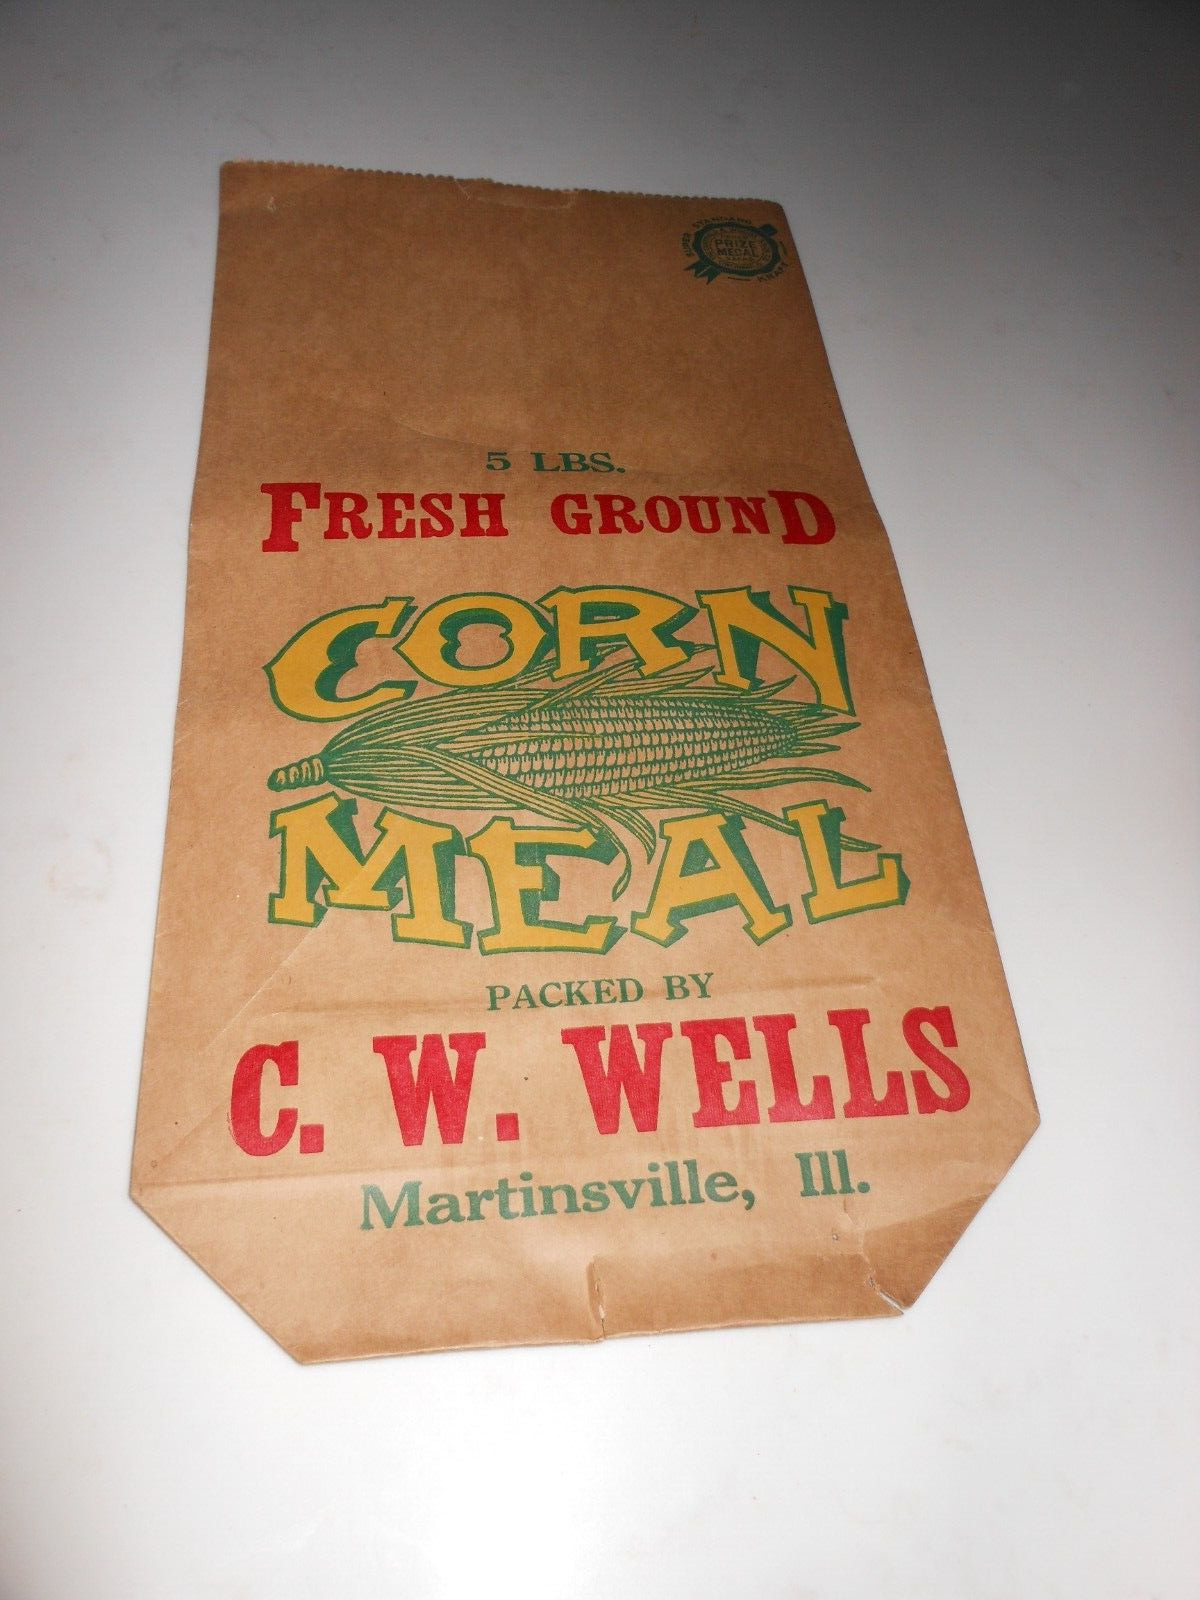 Vtg Fresh Ground CORN Meal 5 lb Paper Bag, C W Wells, Martinsville, ILL